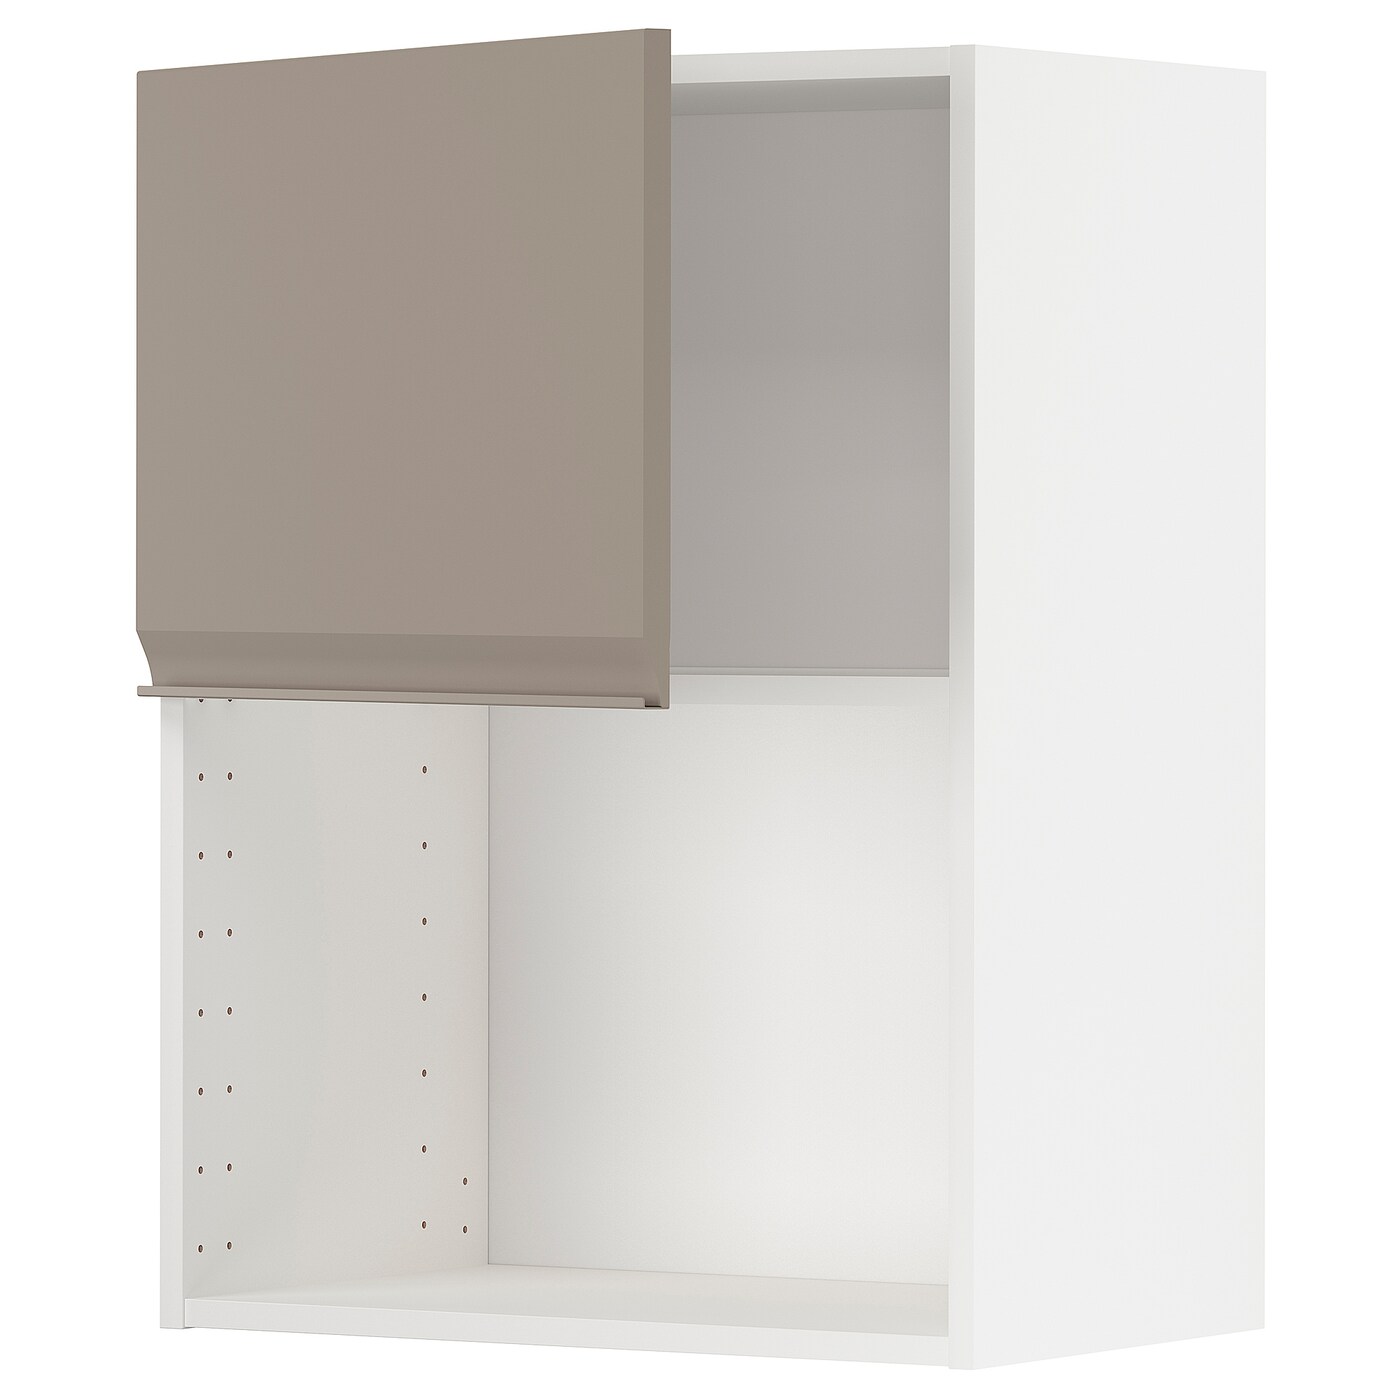 METOD Навесной шкаф - METOD IKEA/ МЕТОД ИКЕА, 80х60 см, белый/светло-коричневый